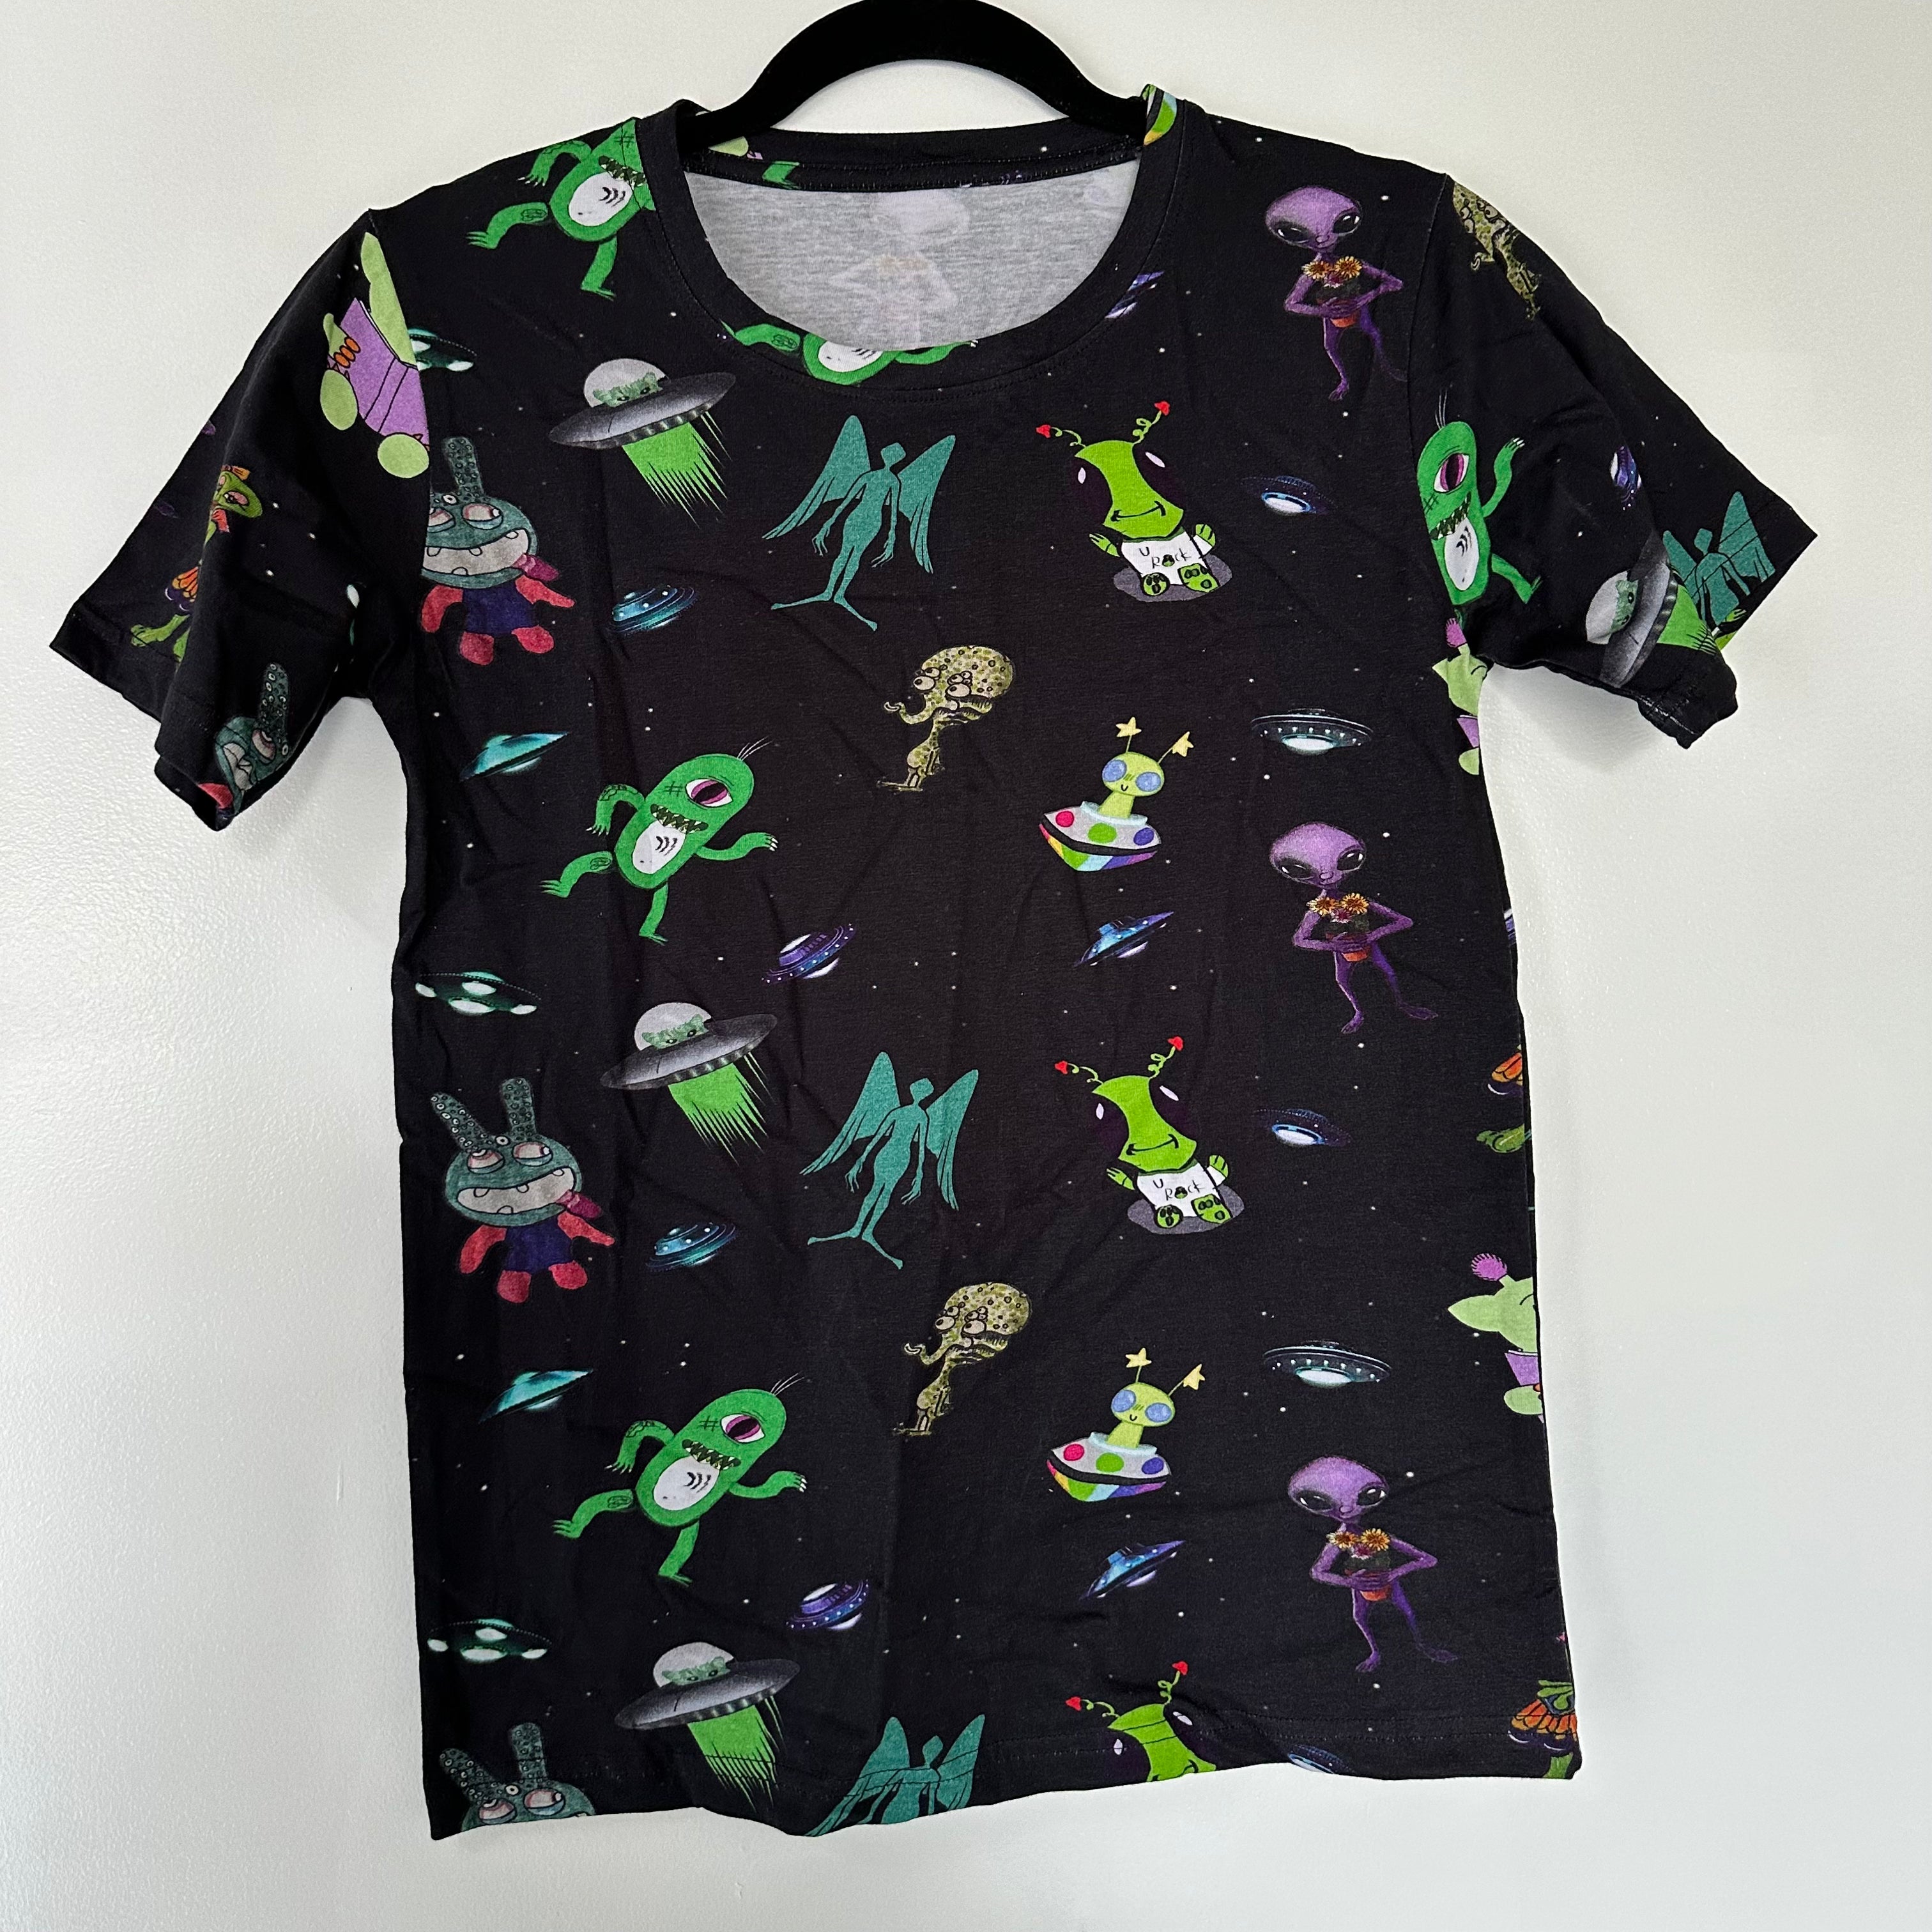 Aliens Art Kids T-Shirt Sample (Big Print) - 11/12 YEARS